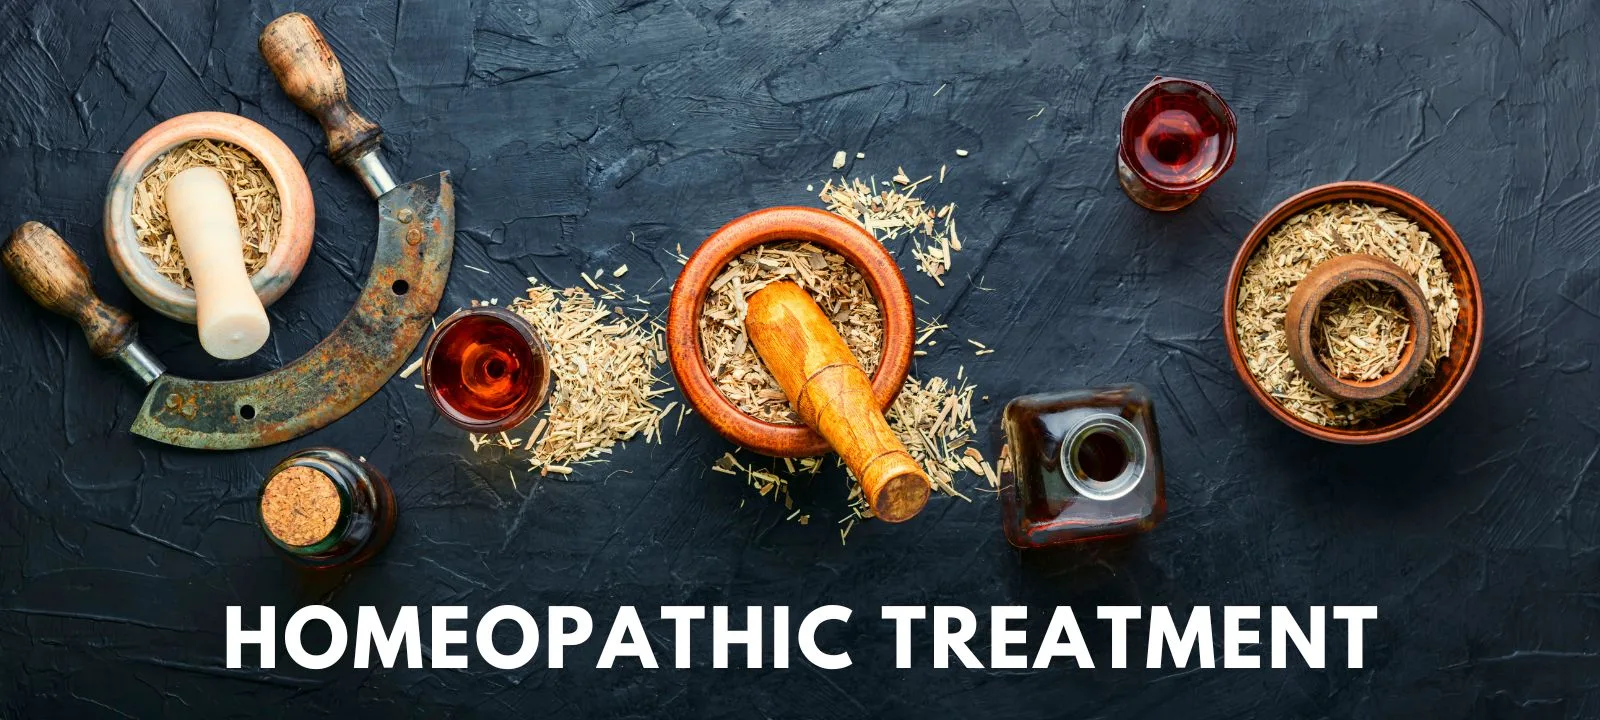 homeopathic treatment jpg